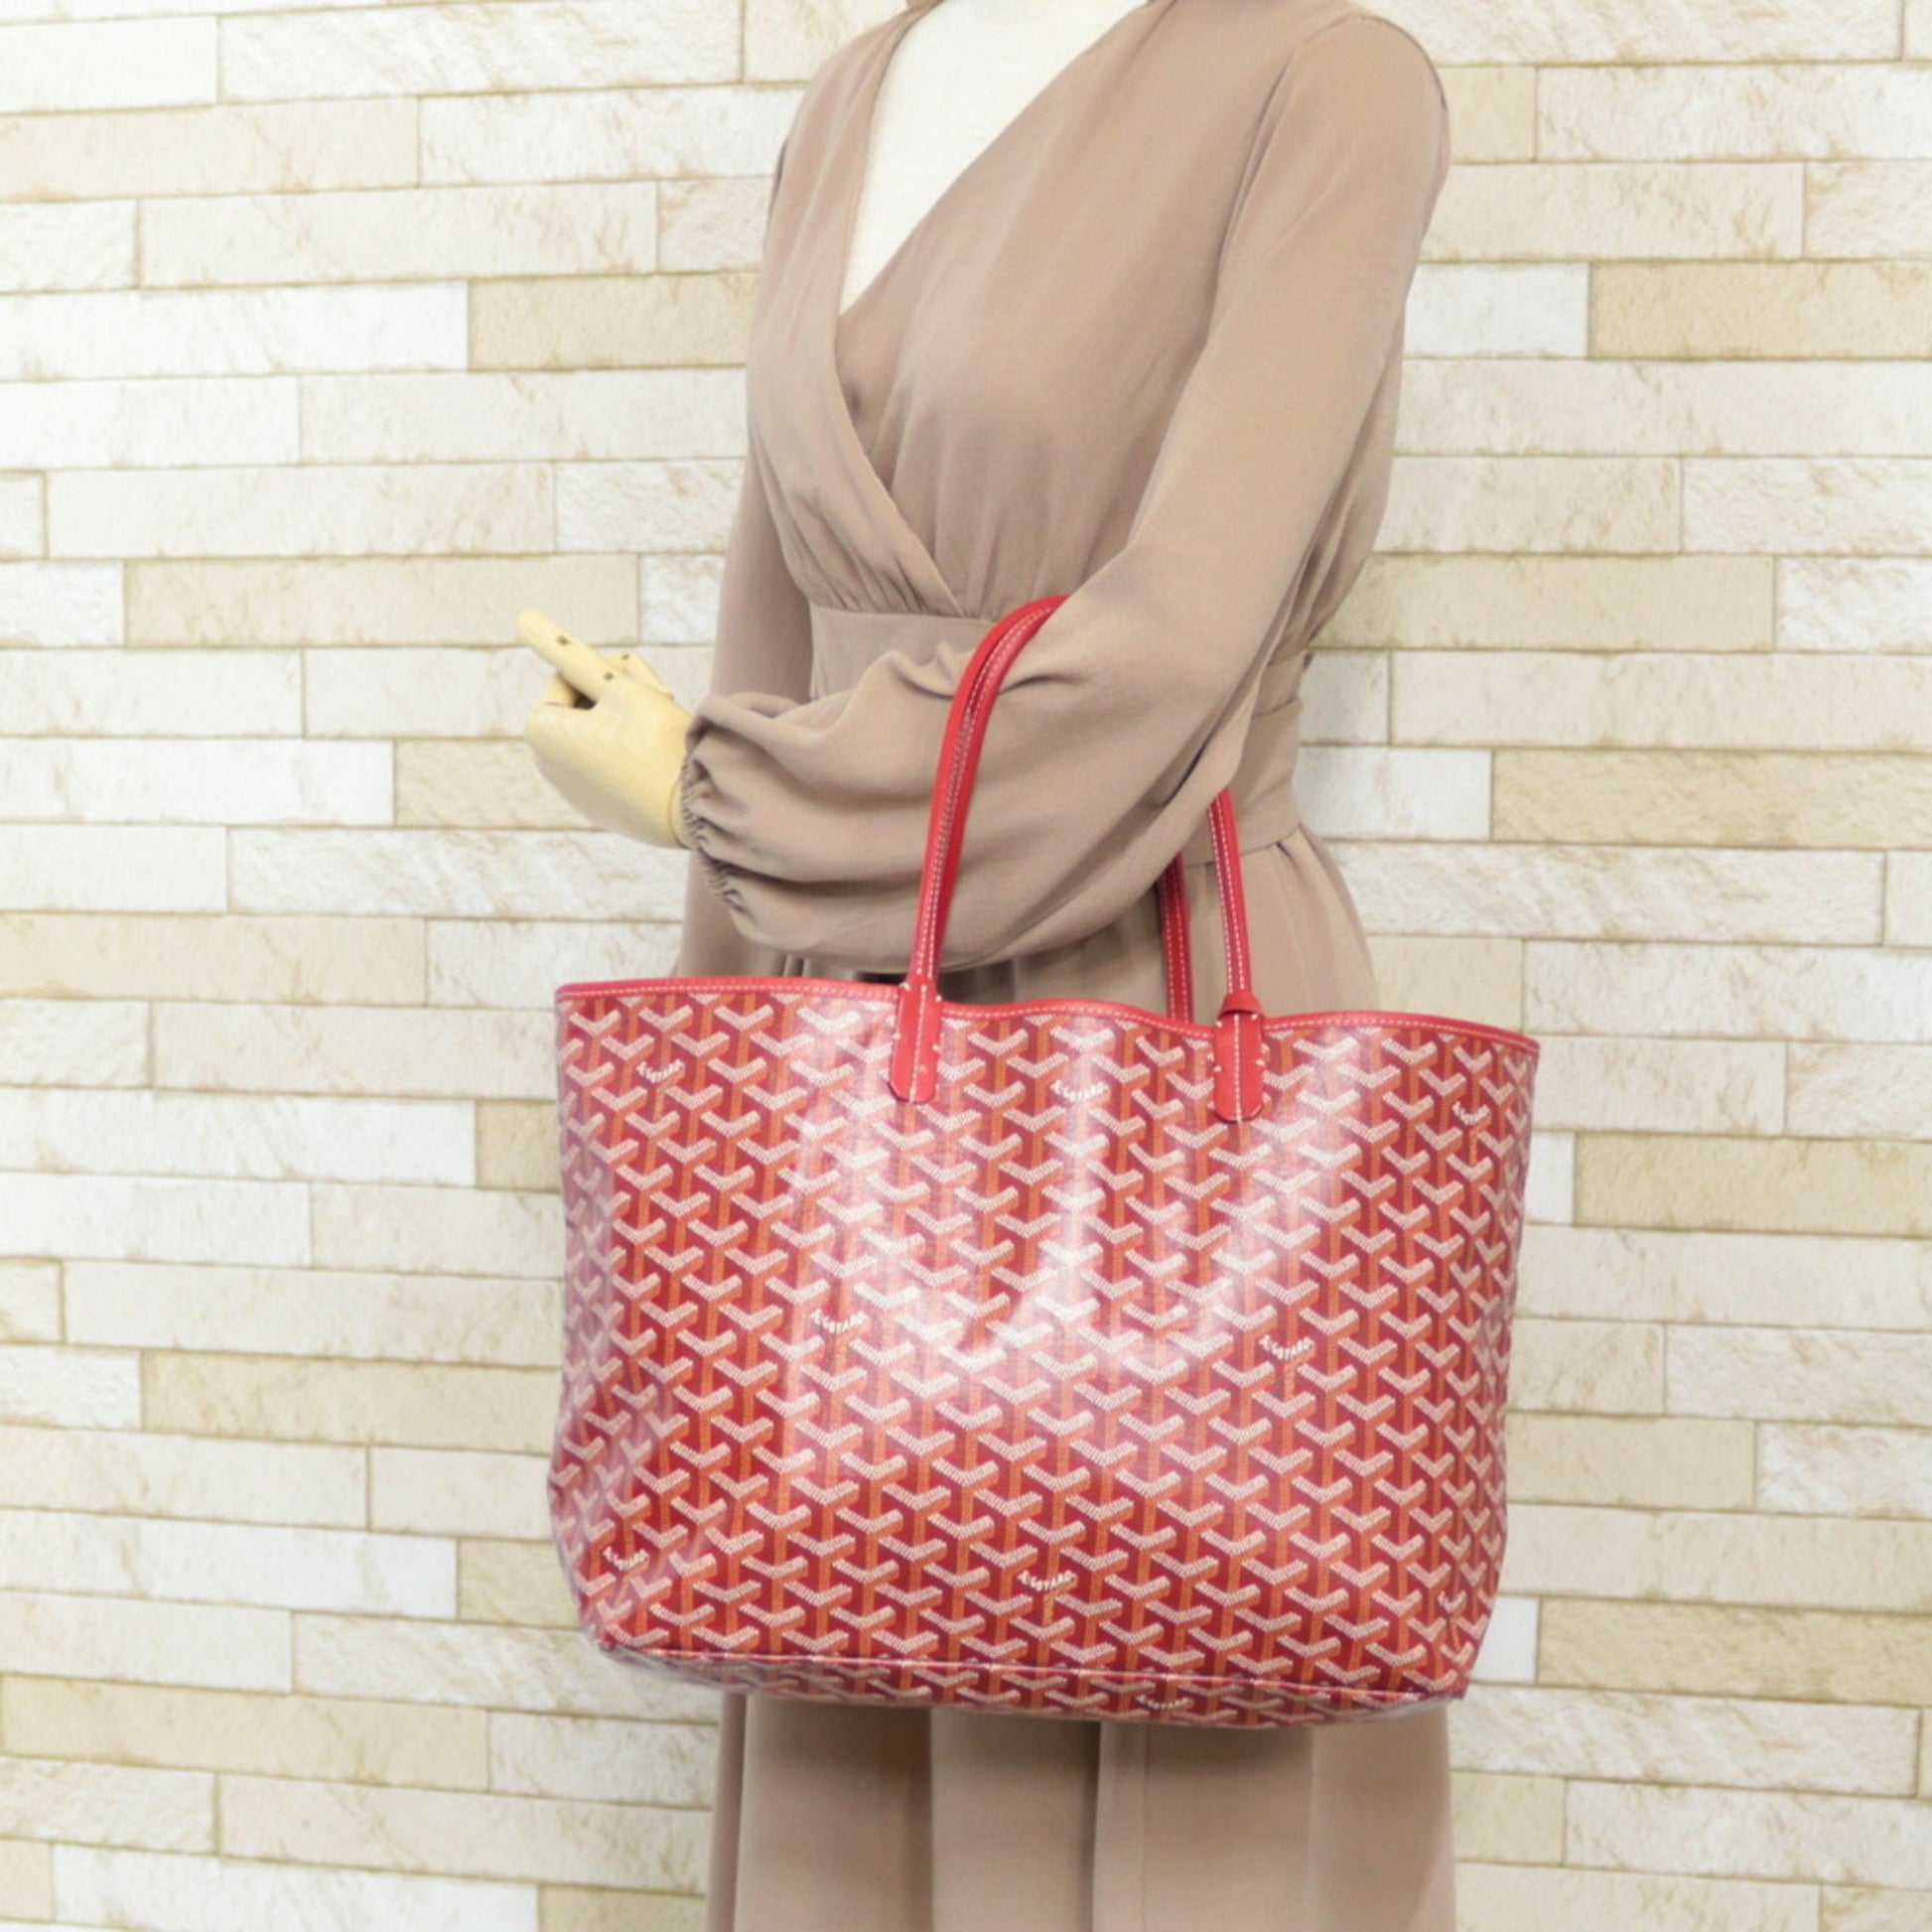 Goyard Pink Bags & Handbags for Women, Authenticity Guaranteed